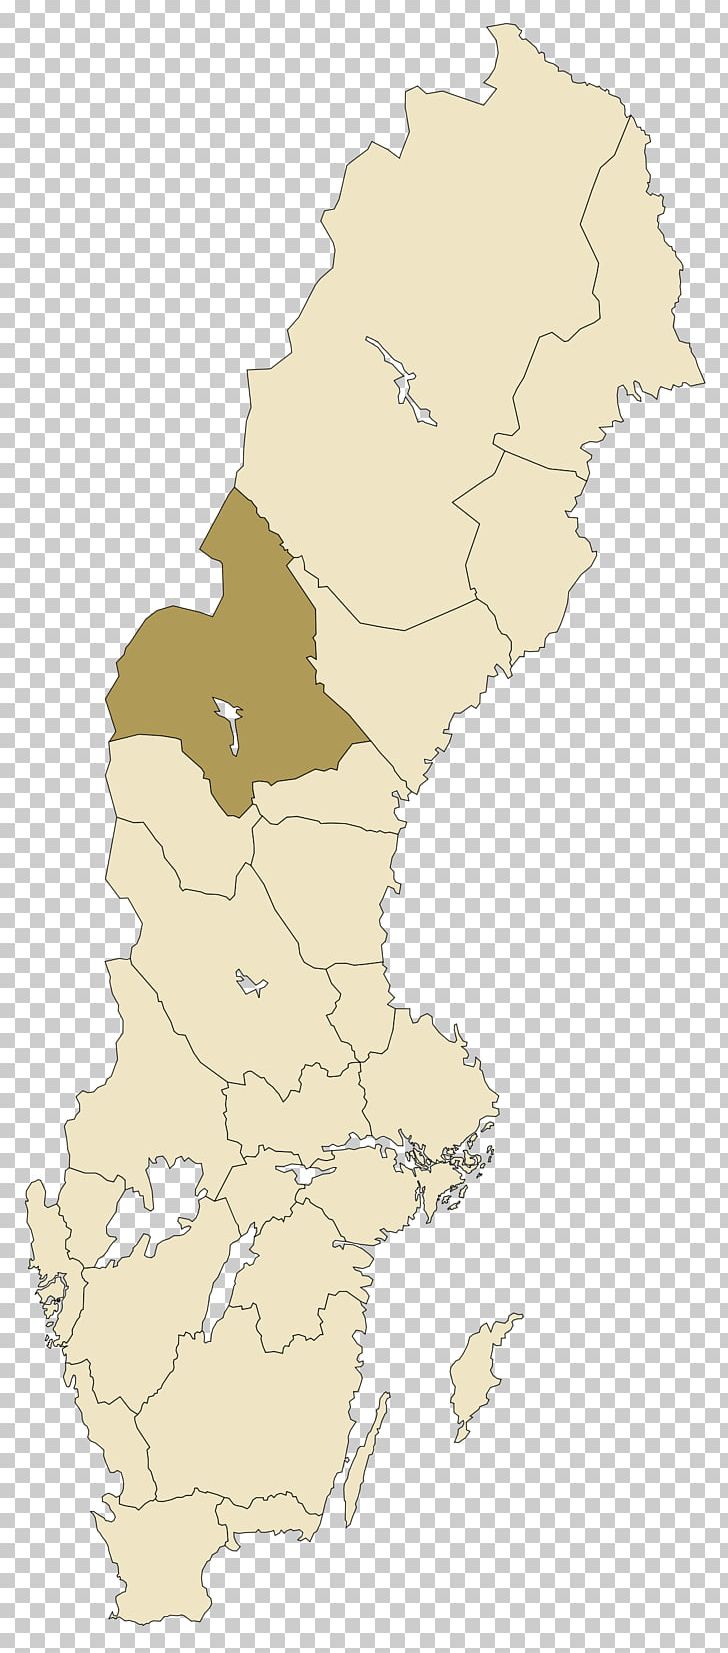 Härjedalen Östersund Medelpad Norrland Jämtland Dialects PNG, Clipart, Dialect, Ecoregion, Historyczne Krainy Szwecji, Map, Republic Of Jamtland Free PNG Download